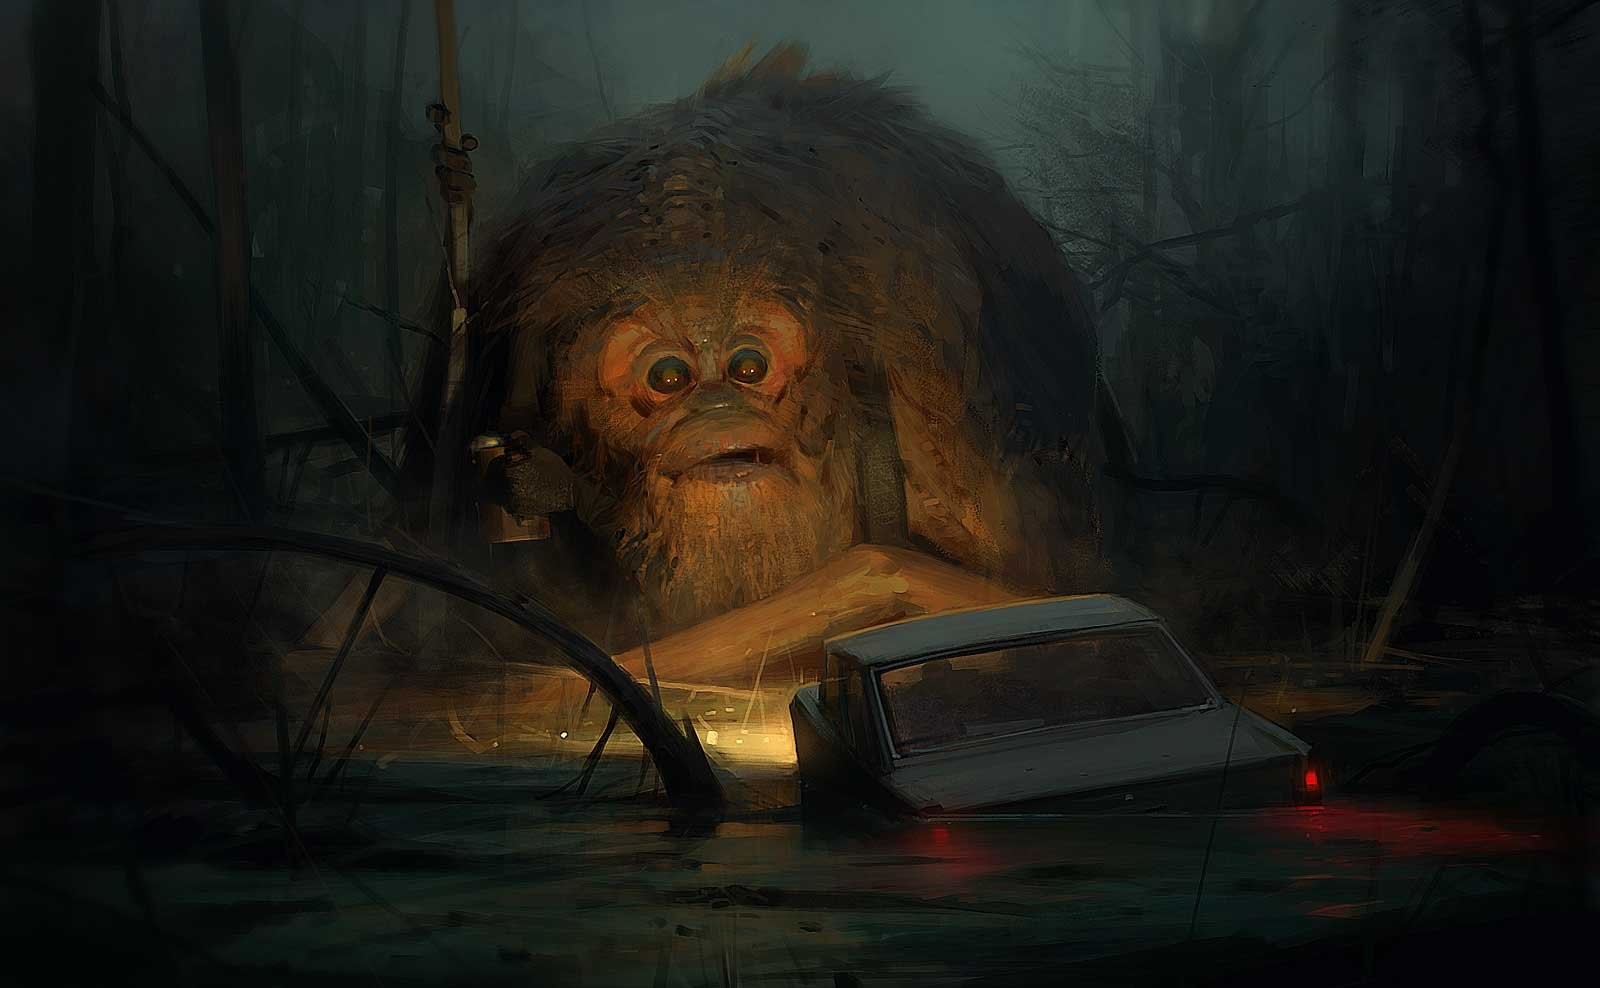 General 1600x988 artwork car creature vehicle dark swamp night fantasy art Sergey Kolesov